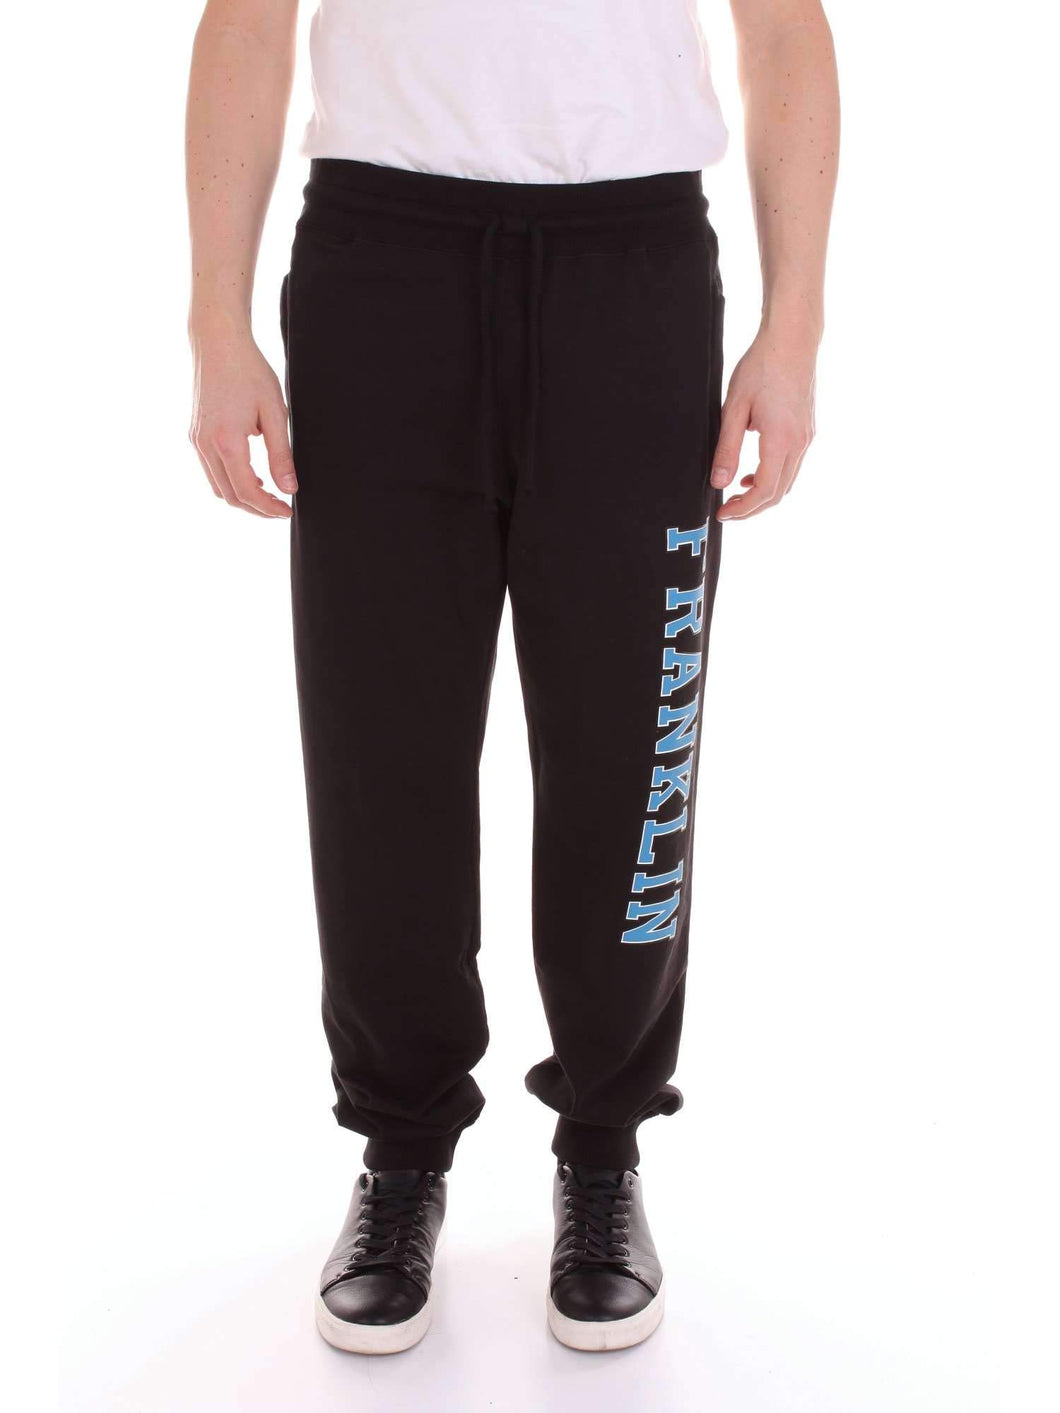 Franklin & Marshall Fleece Pants Jersey Black Pantalone in Felpa Nero con Grafica Blu (XS)